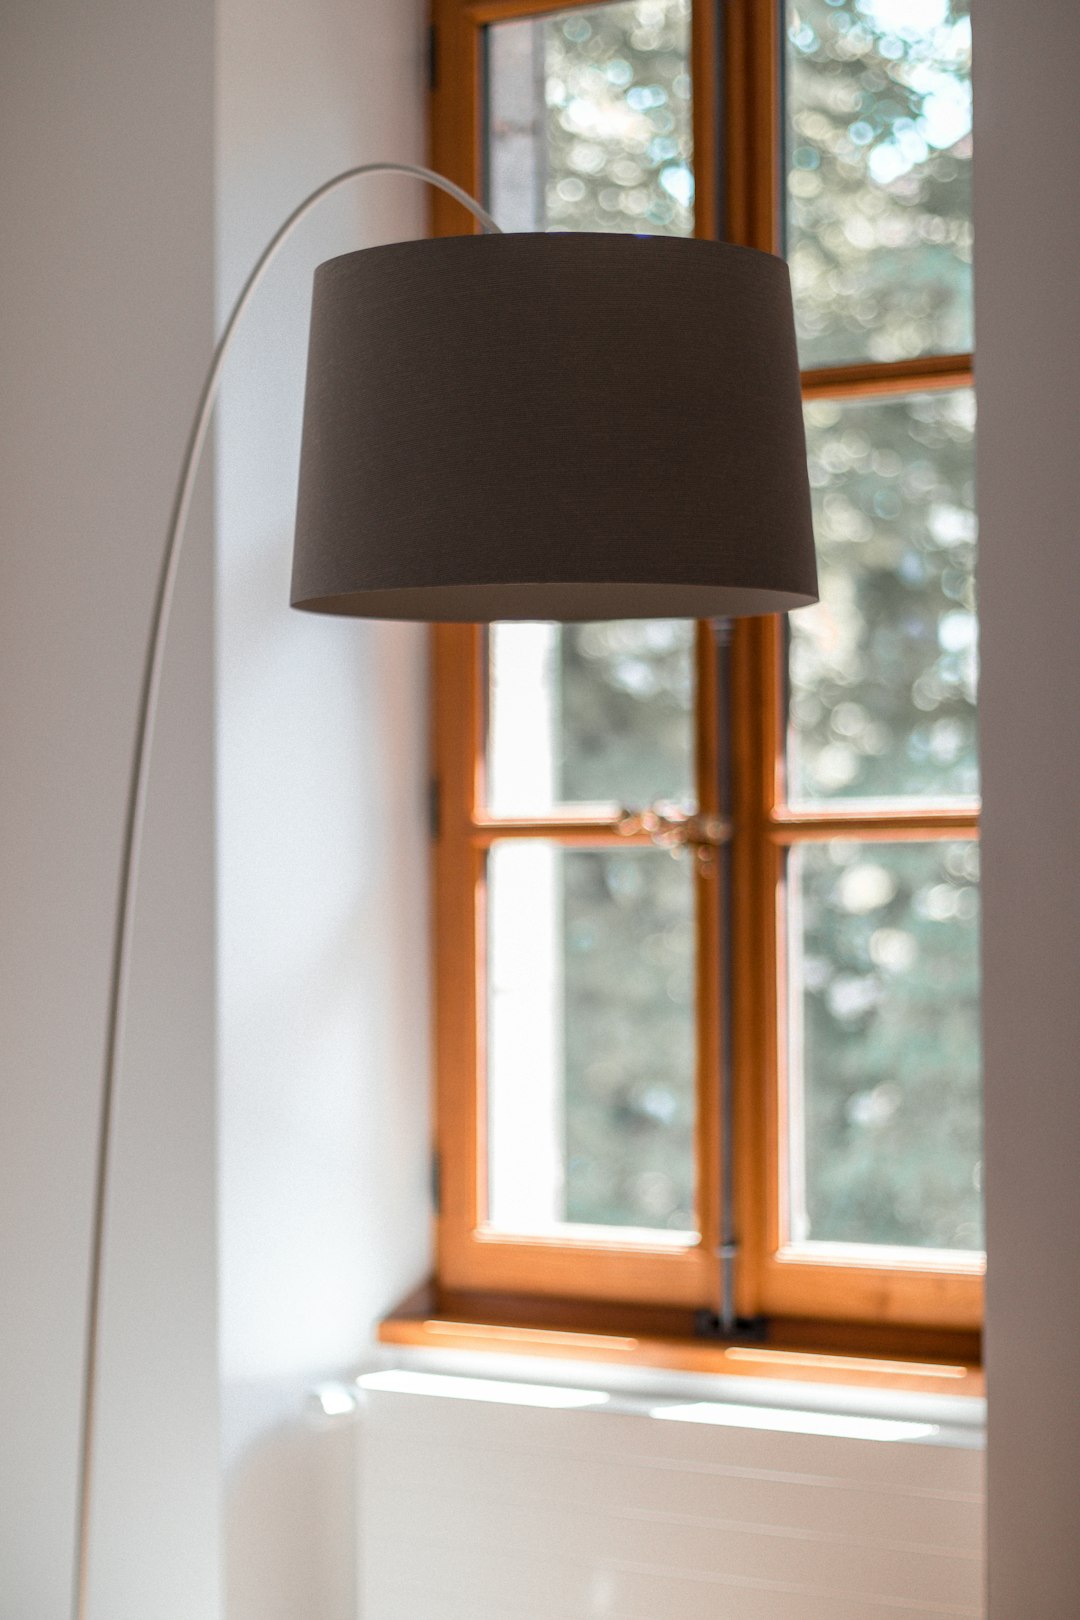 black pendant lamp near window